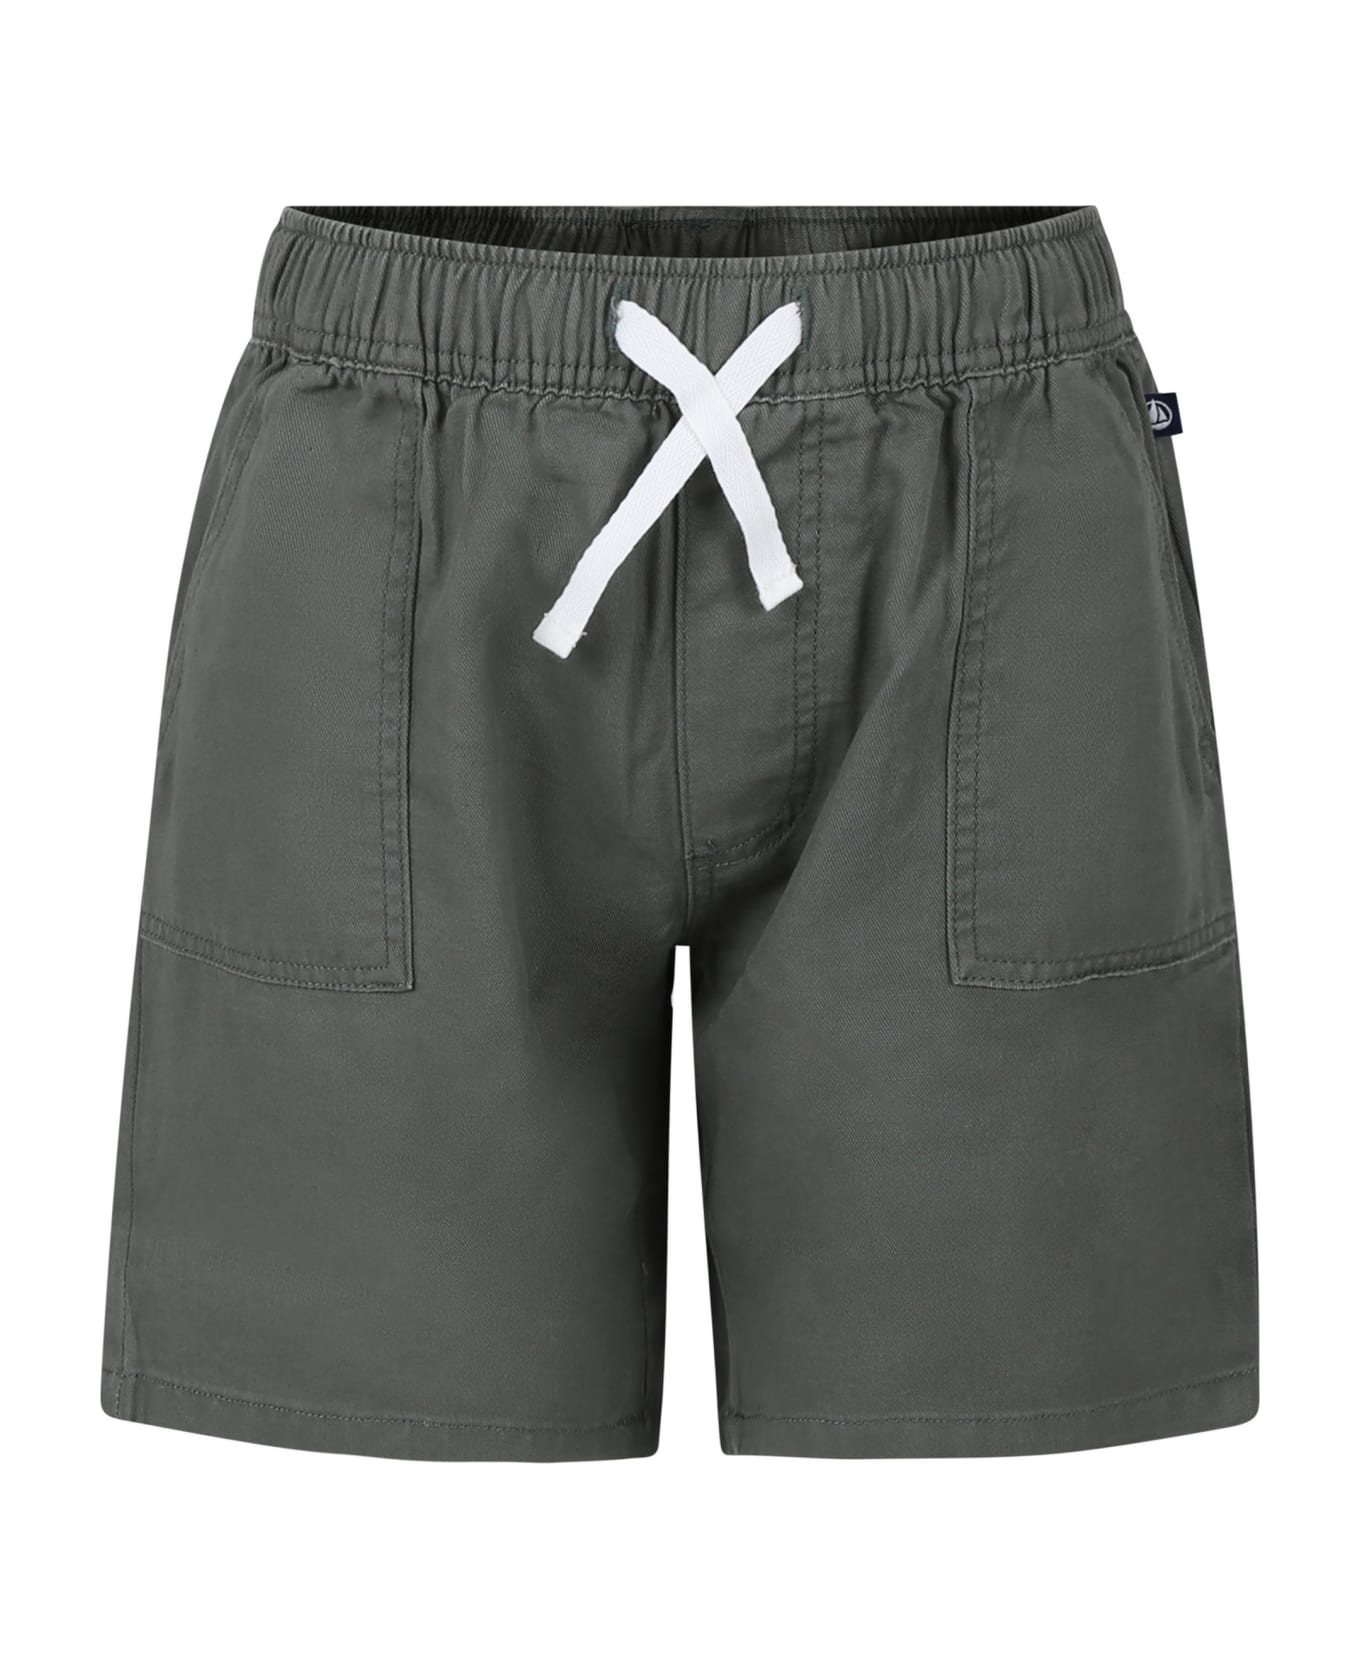 Petit Bateau Green Shorts For Boy - Green